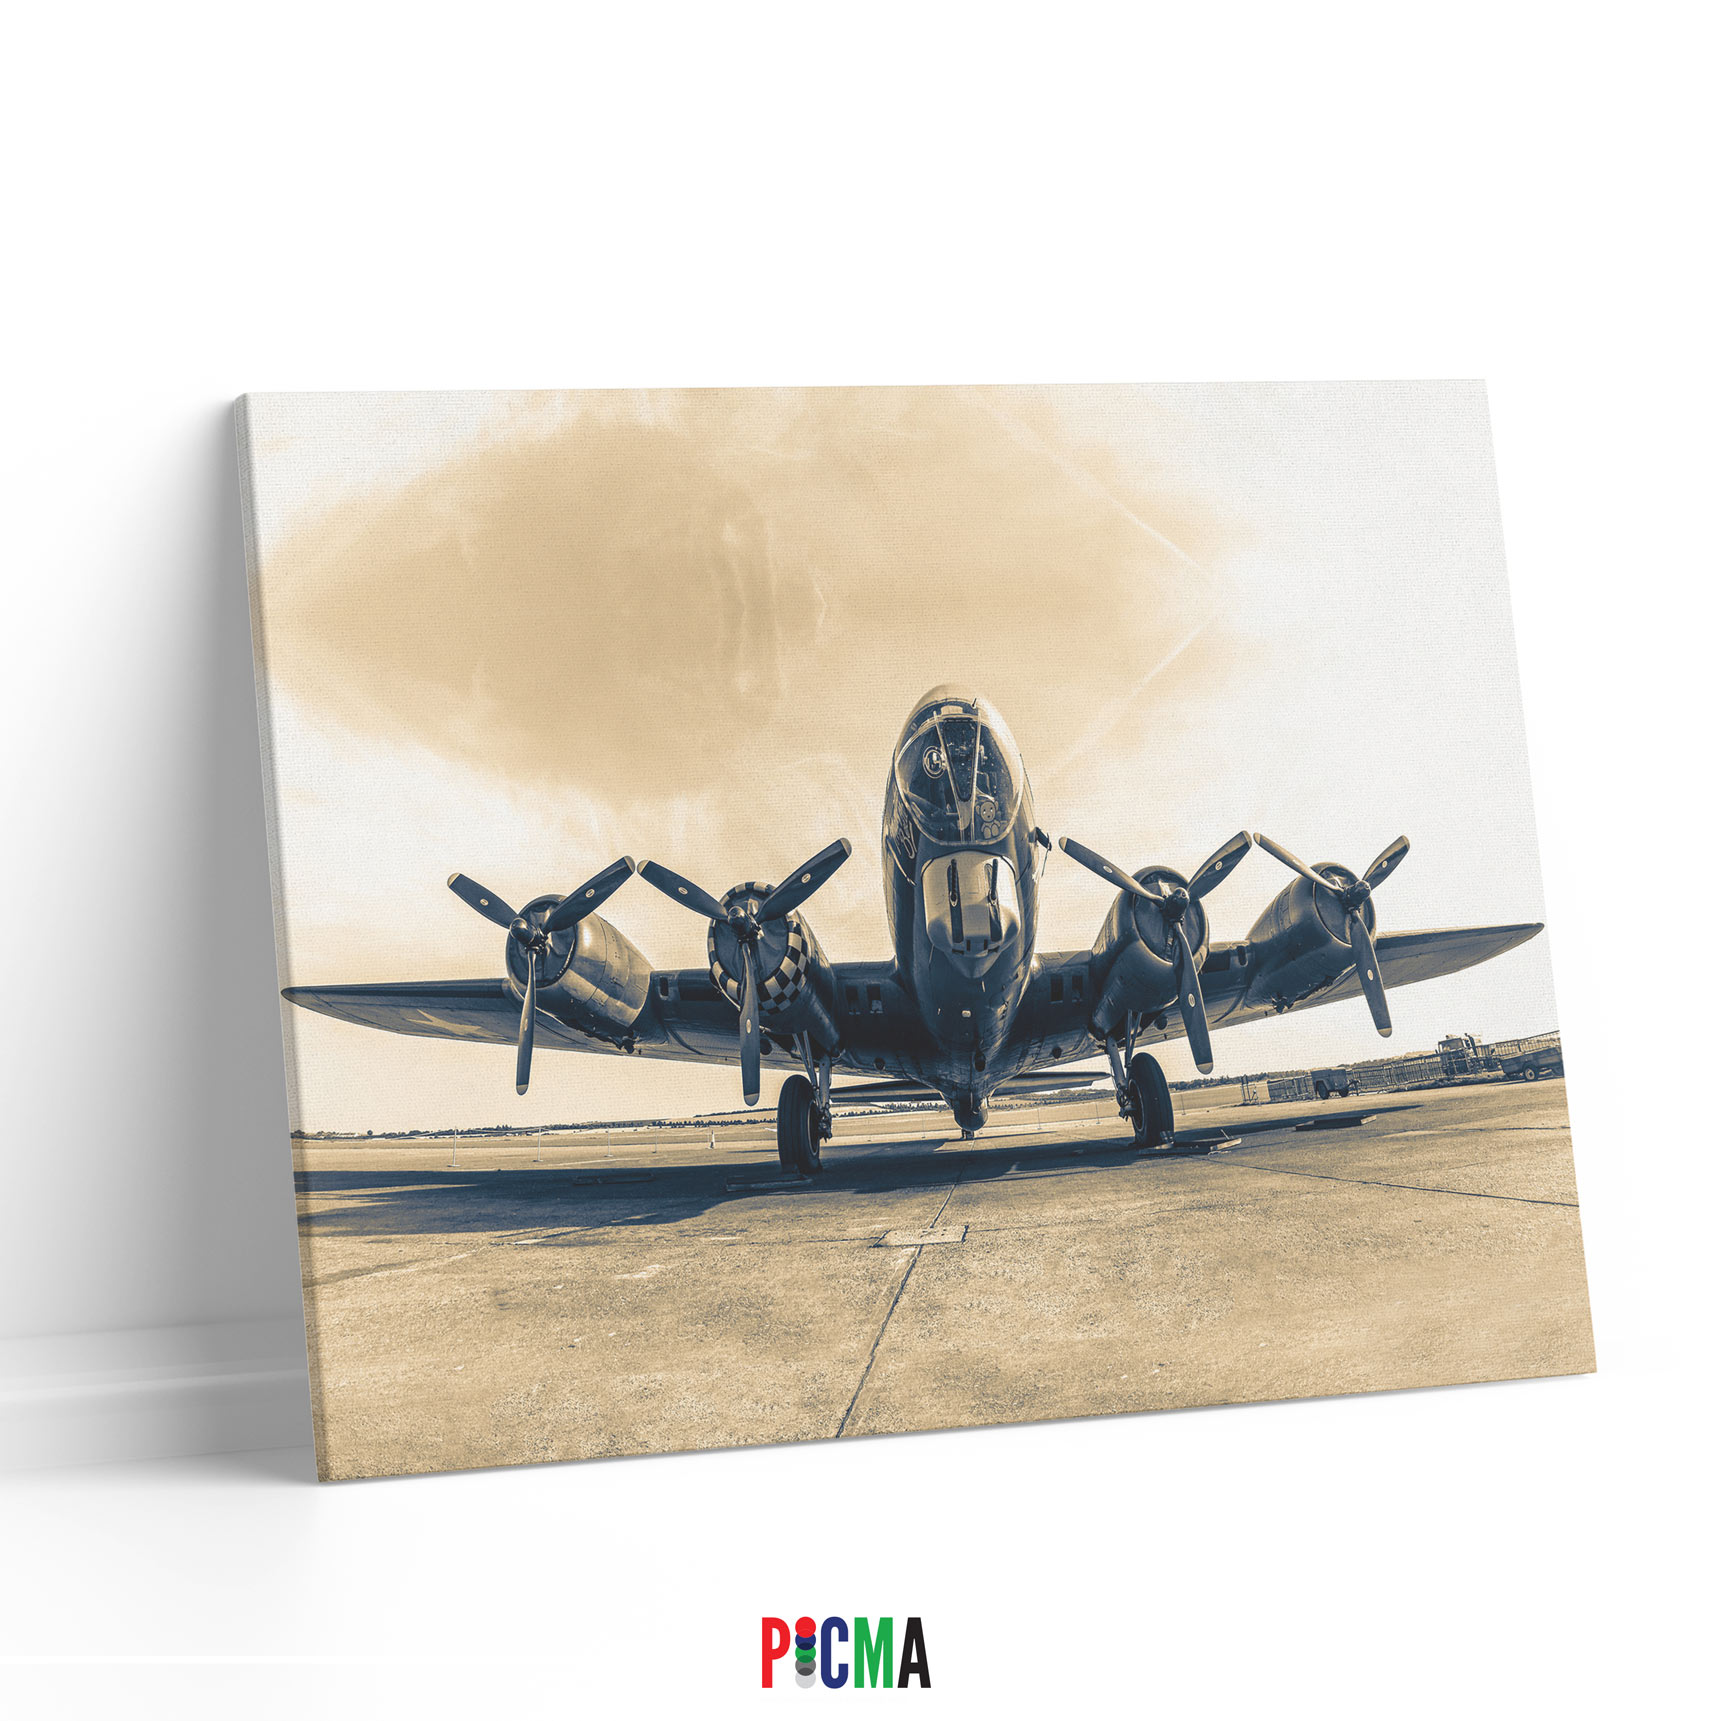 Tablou canvas Avion pe plaja, Picma, standard, panza + sasiu lemn, 40 x 60 cm